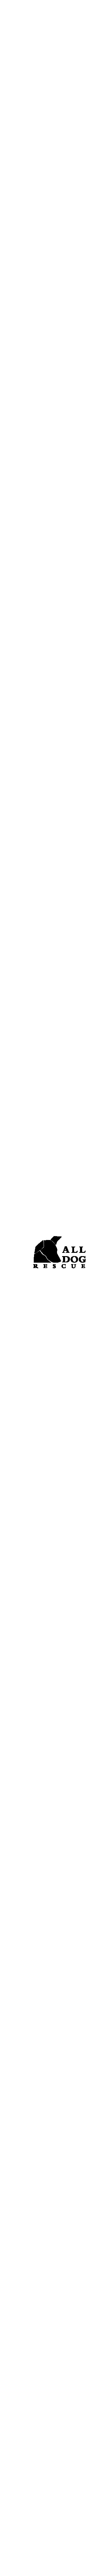 All Dog Rescue, Inc.